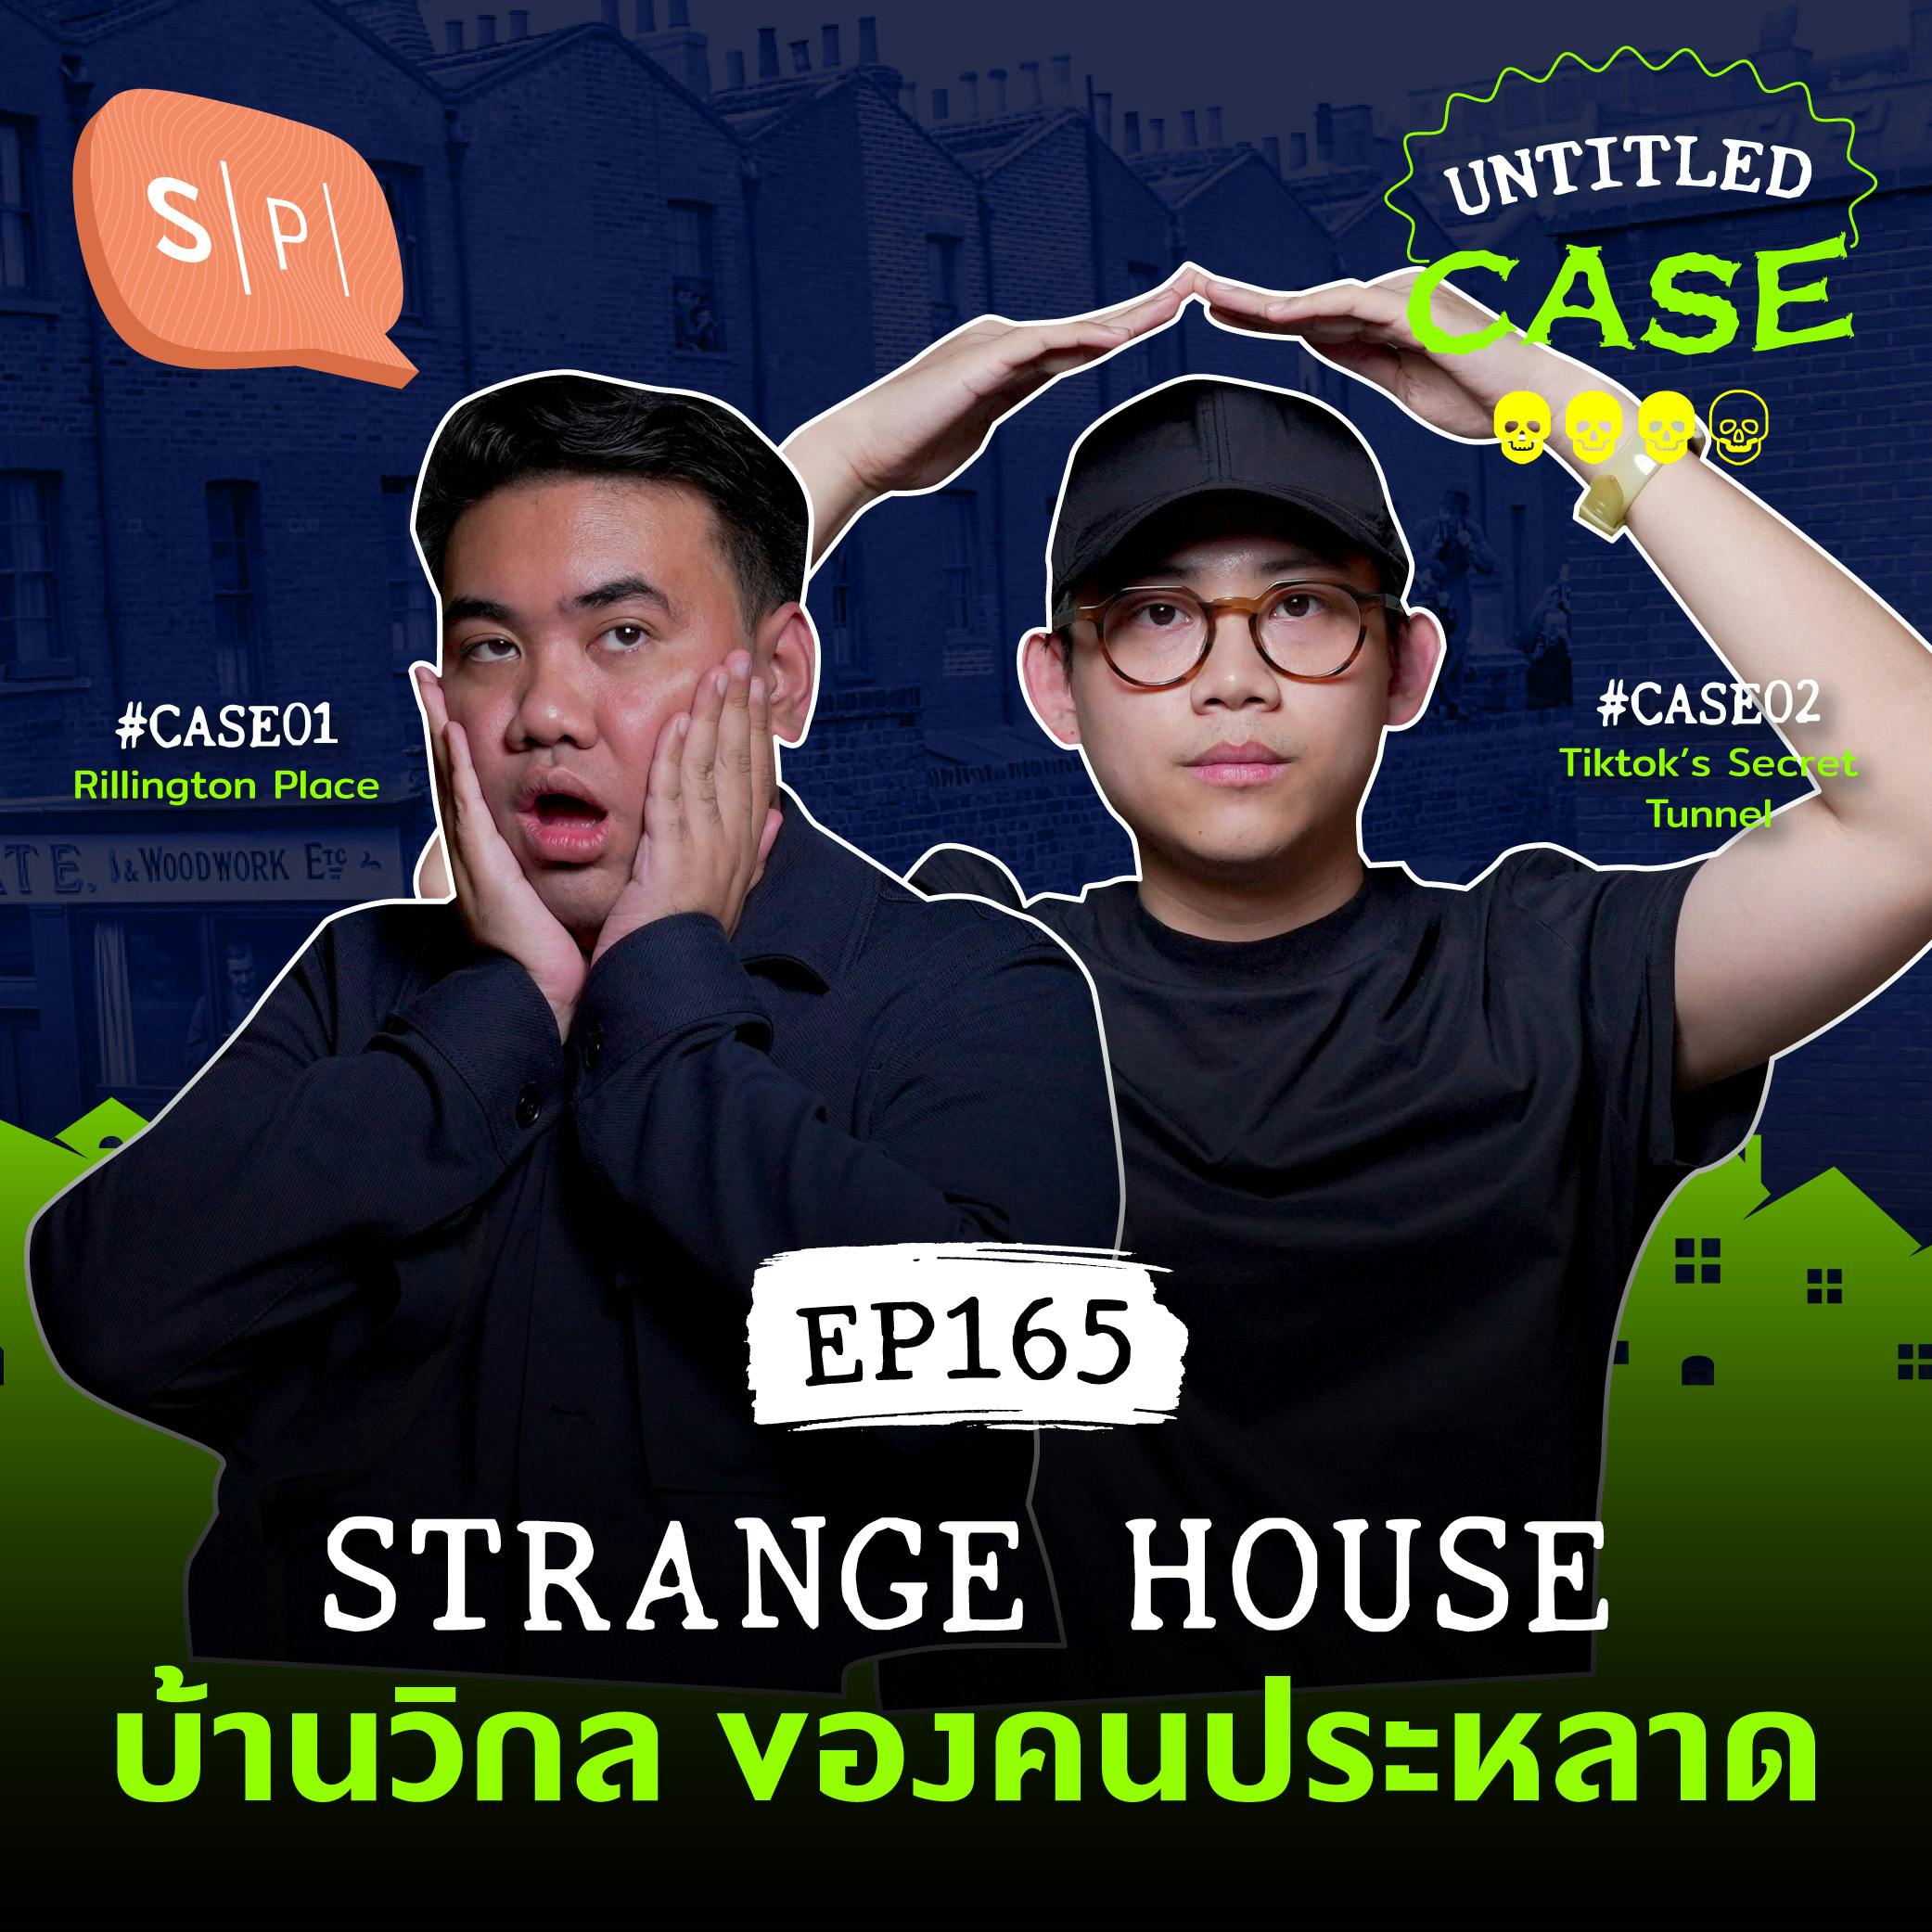 Strange House บ้านวิกล ของคนประหลาด | Untitled Case EP165